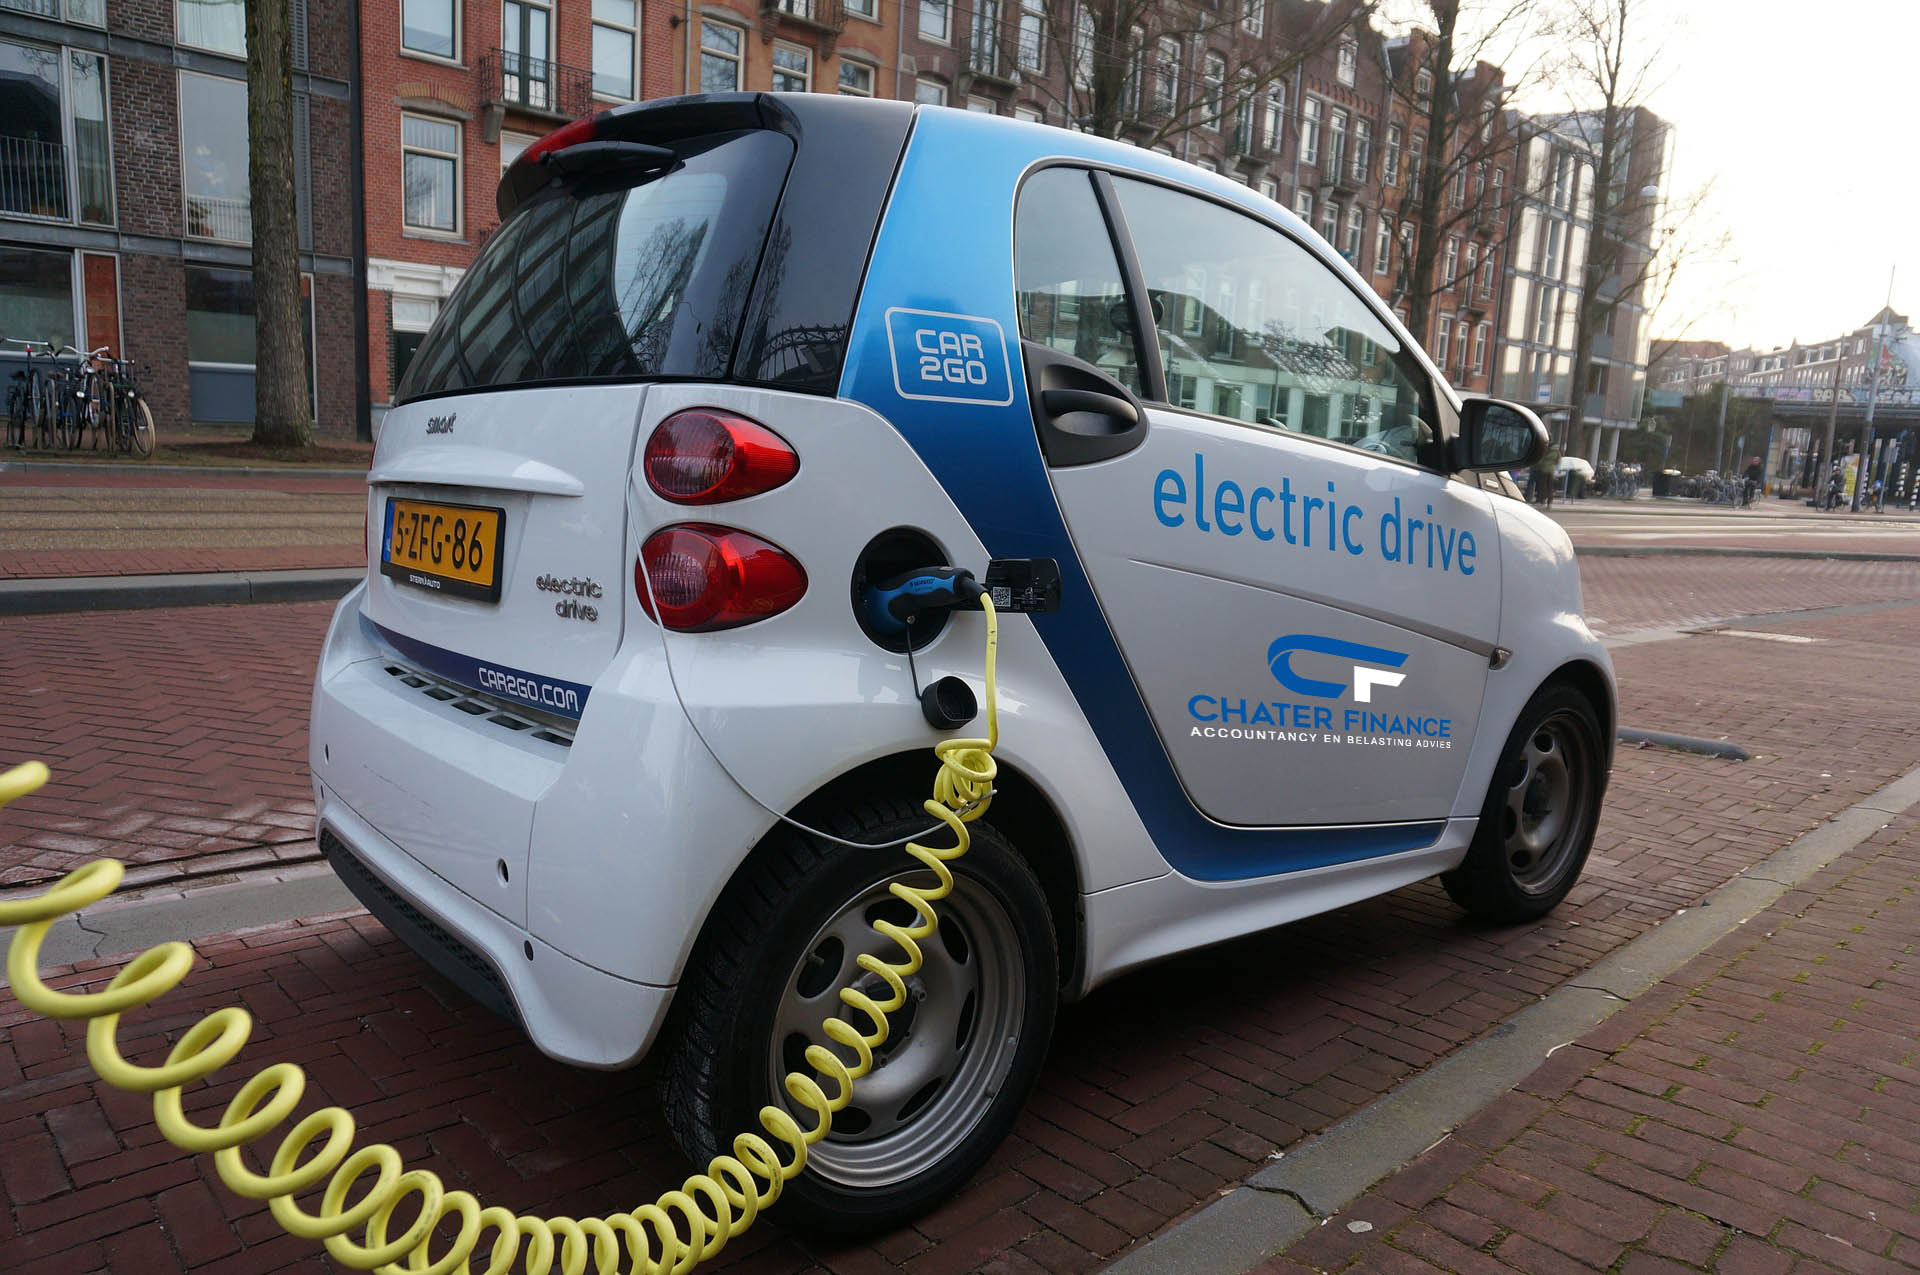 Wijziging subsidieregeling elektrische personenauto’s